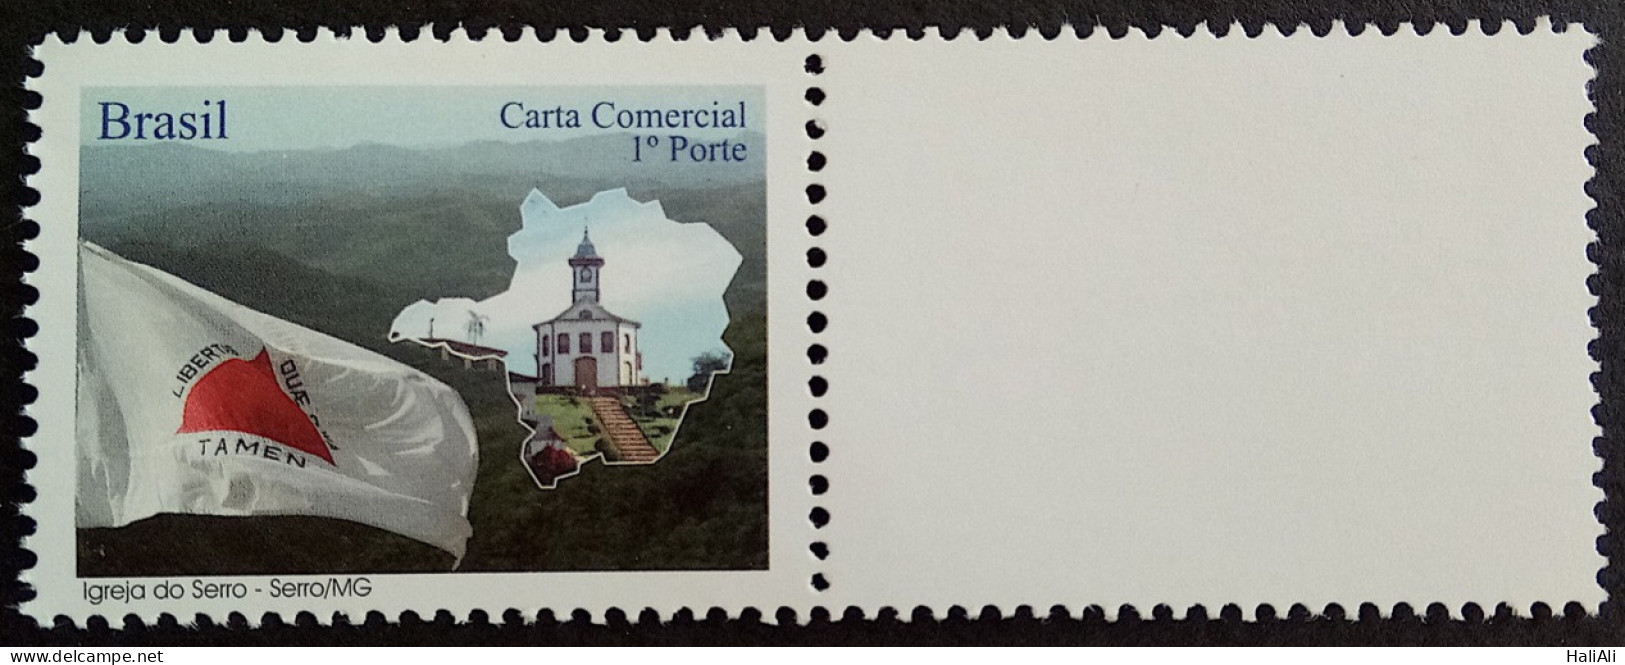 C 2855 Brazil Personalized Stamp Tourism Minas Gerais Church Of Serro Map Flag 2009 Horizontal Subtitle Vignette White - Personalized Stamps